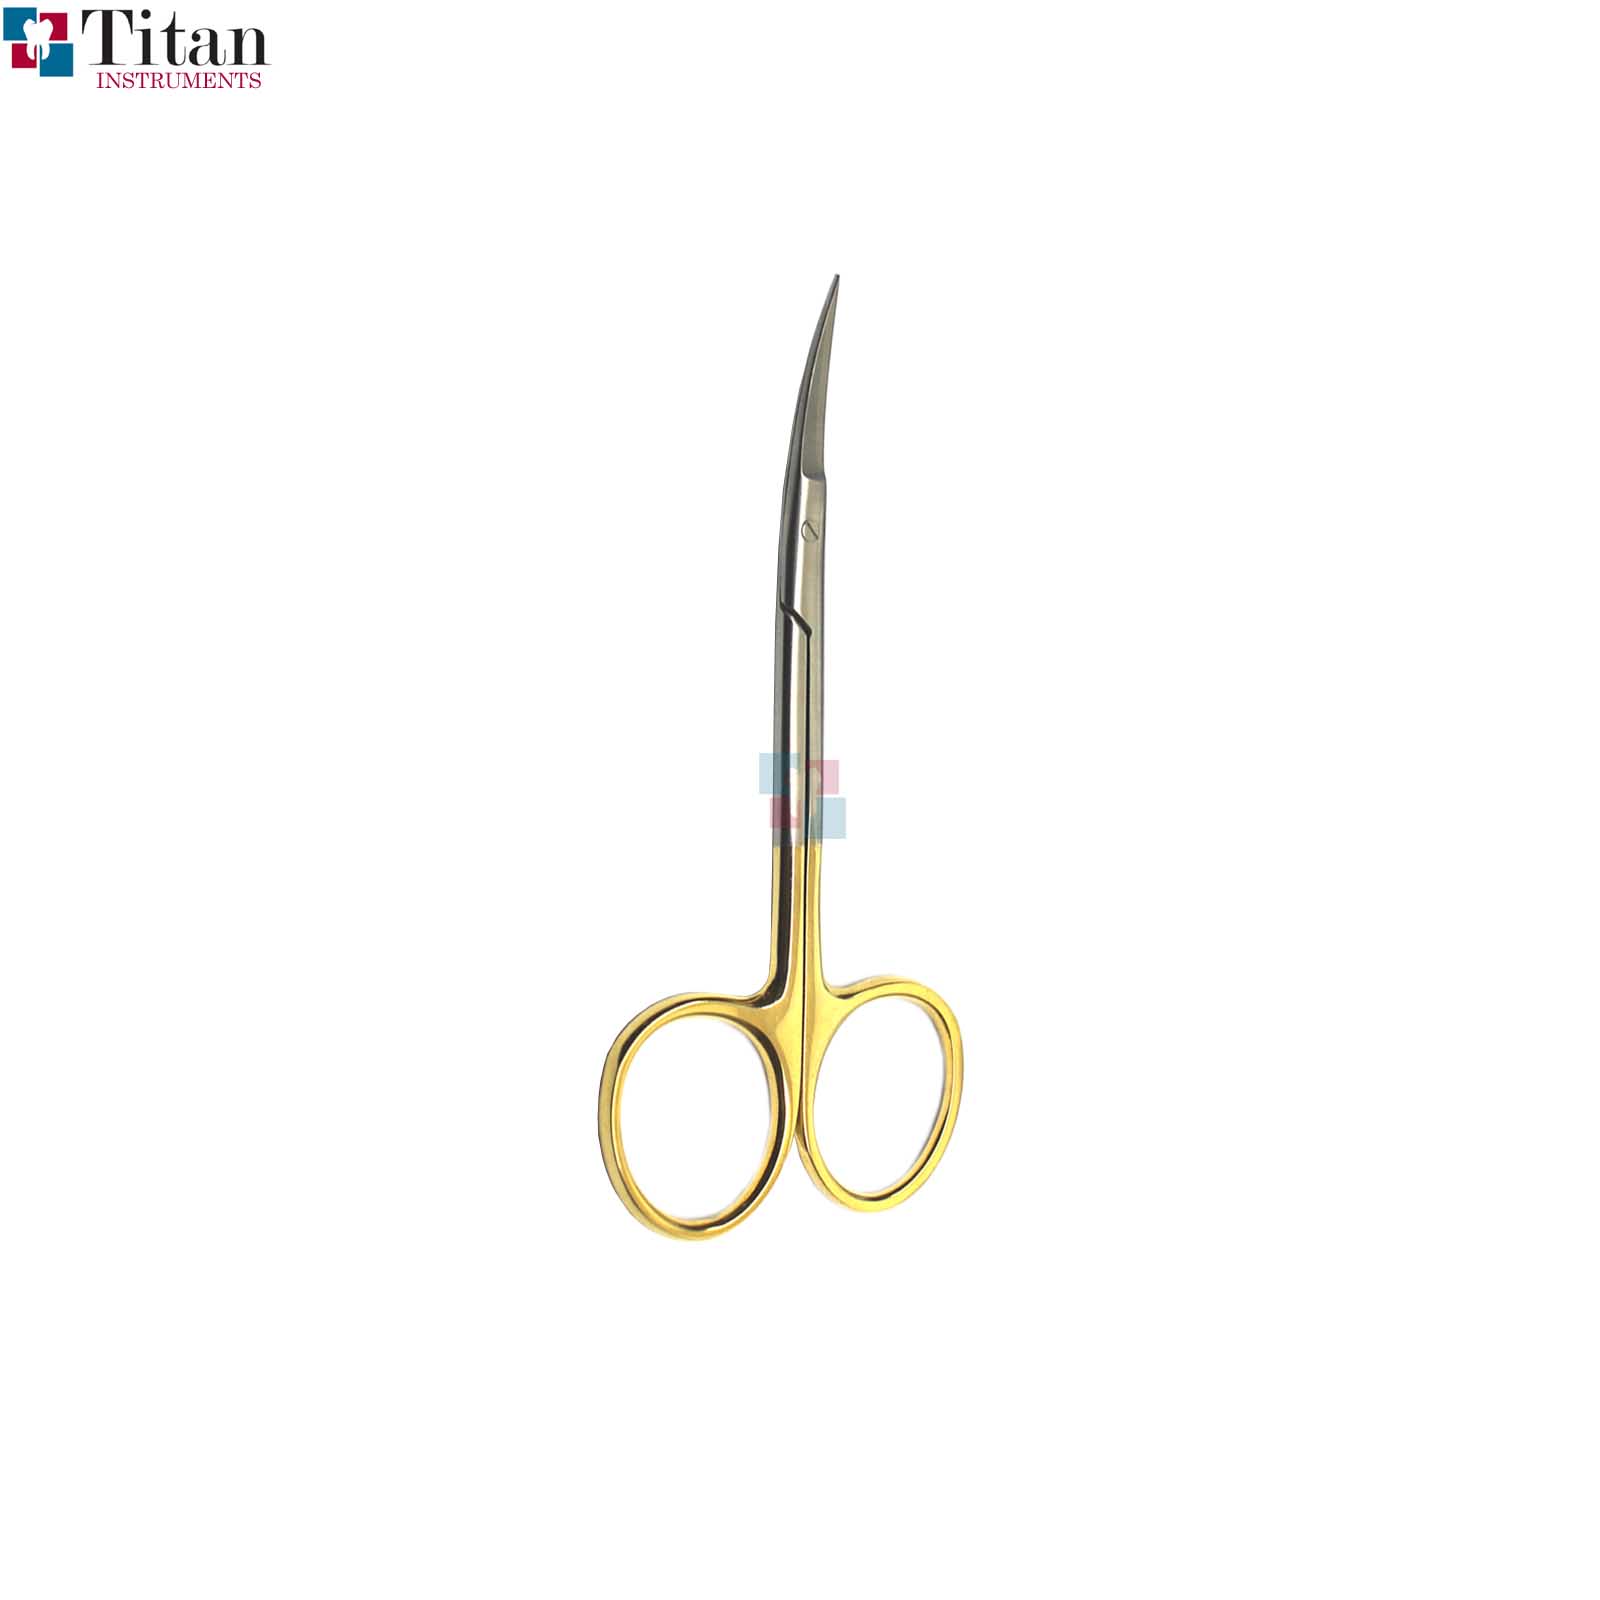 T800 IRIS Scissors, curved  Paradise Dental Technologies